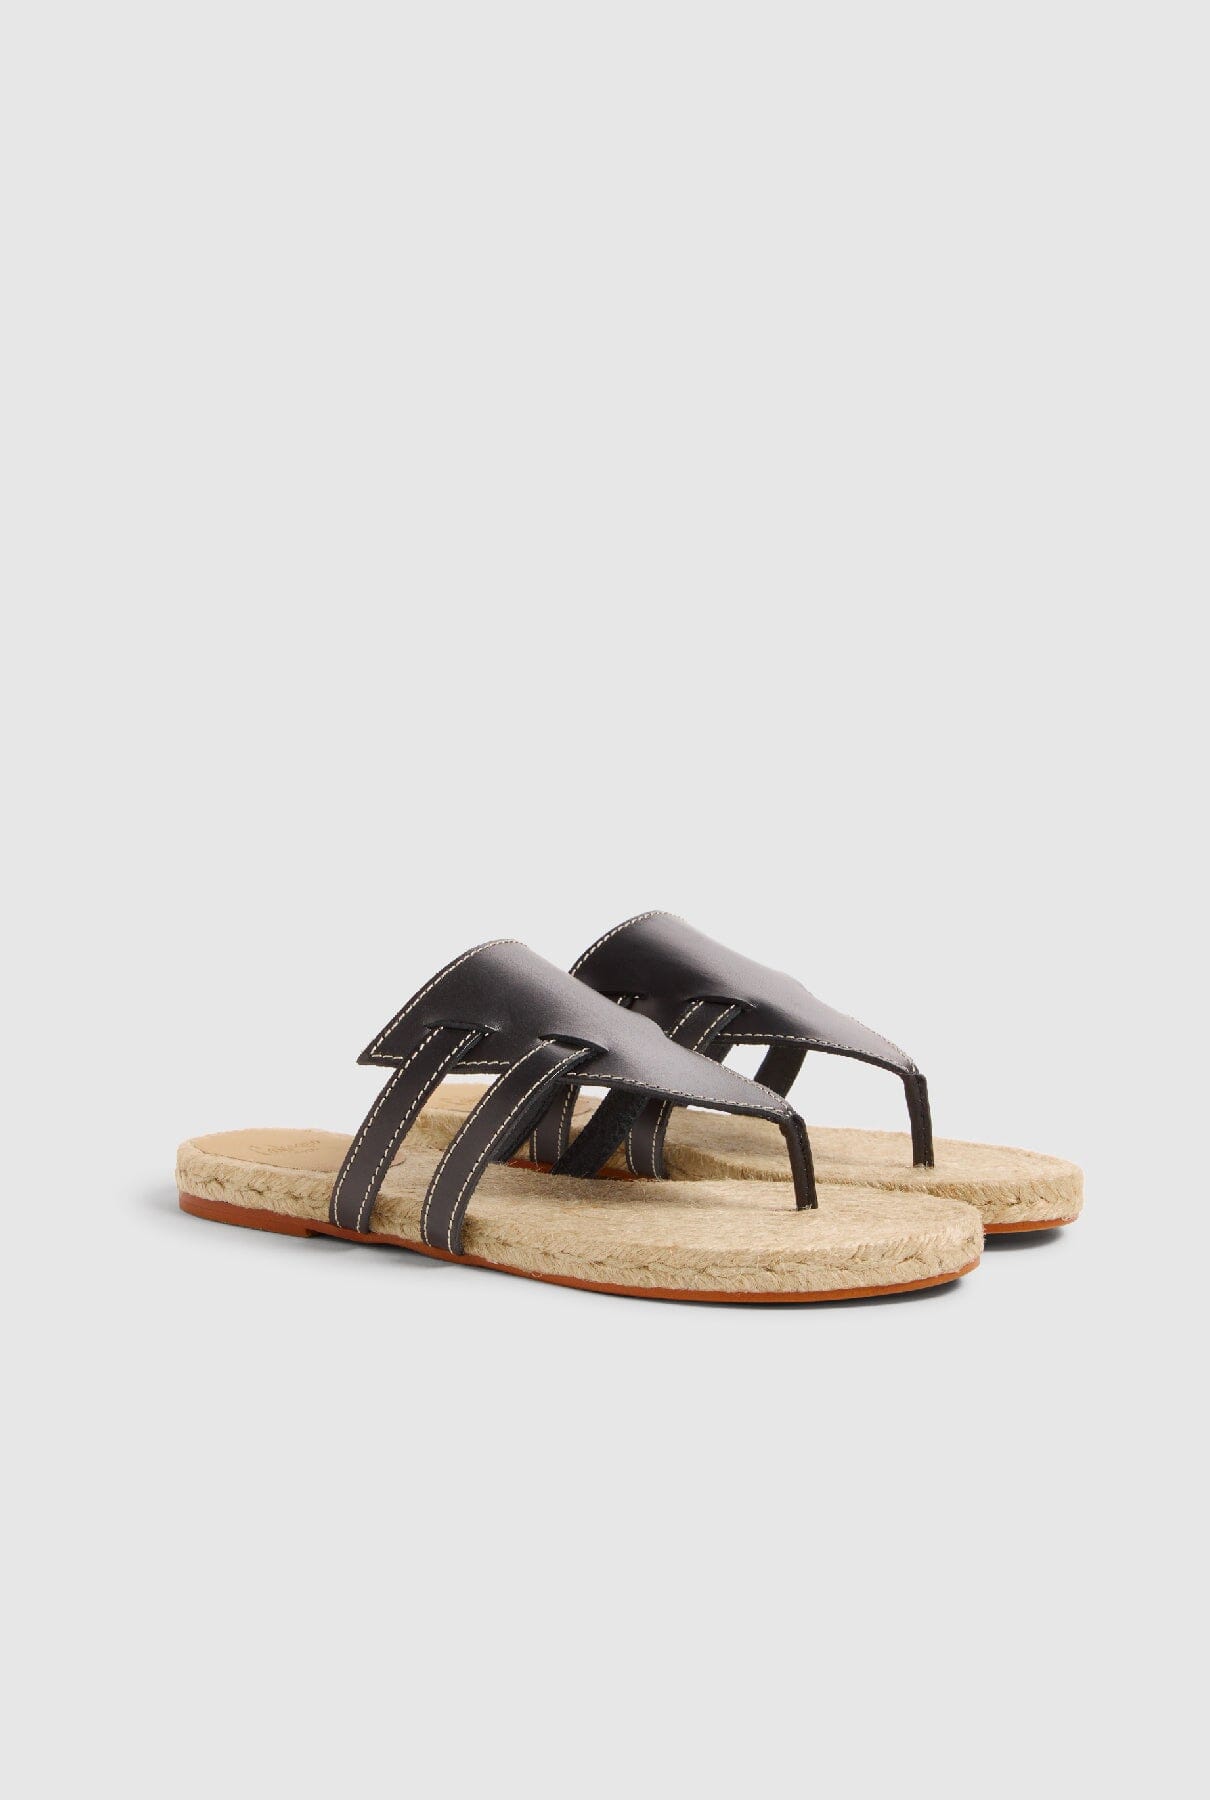 PIARA/187 NEGRO Flat sandals Castañer 